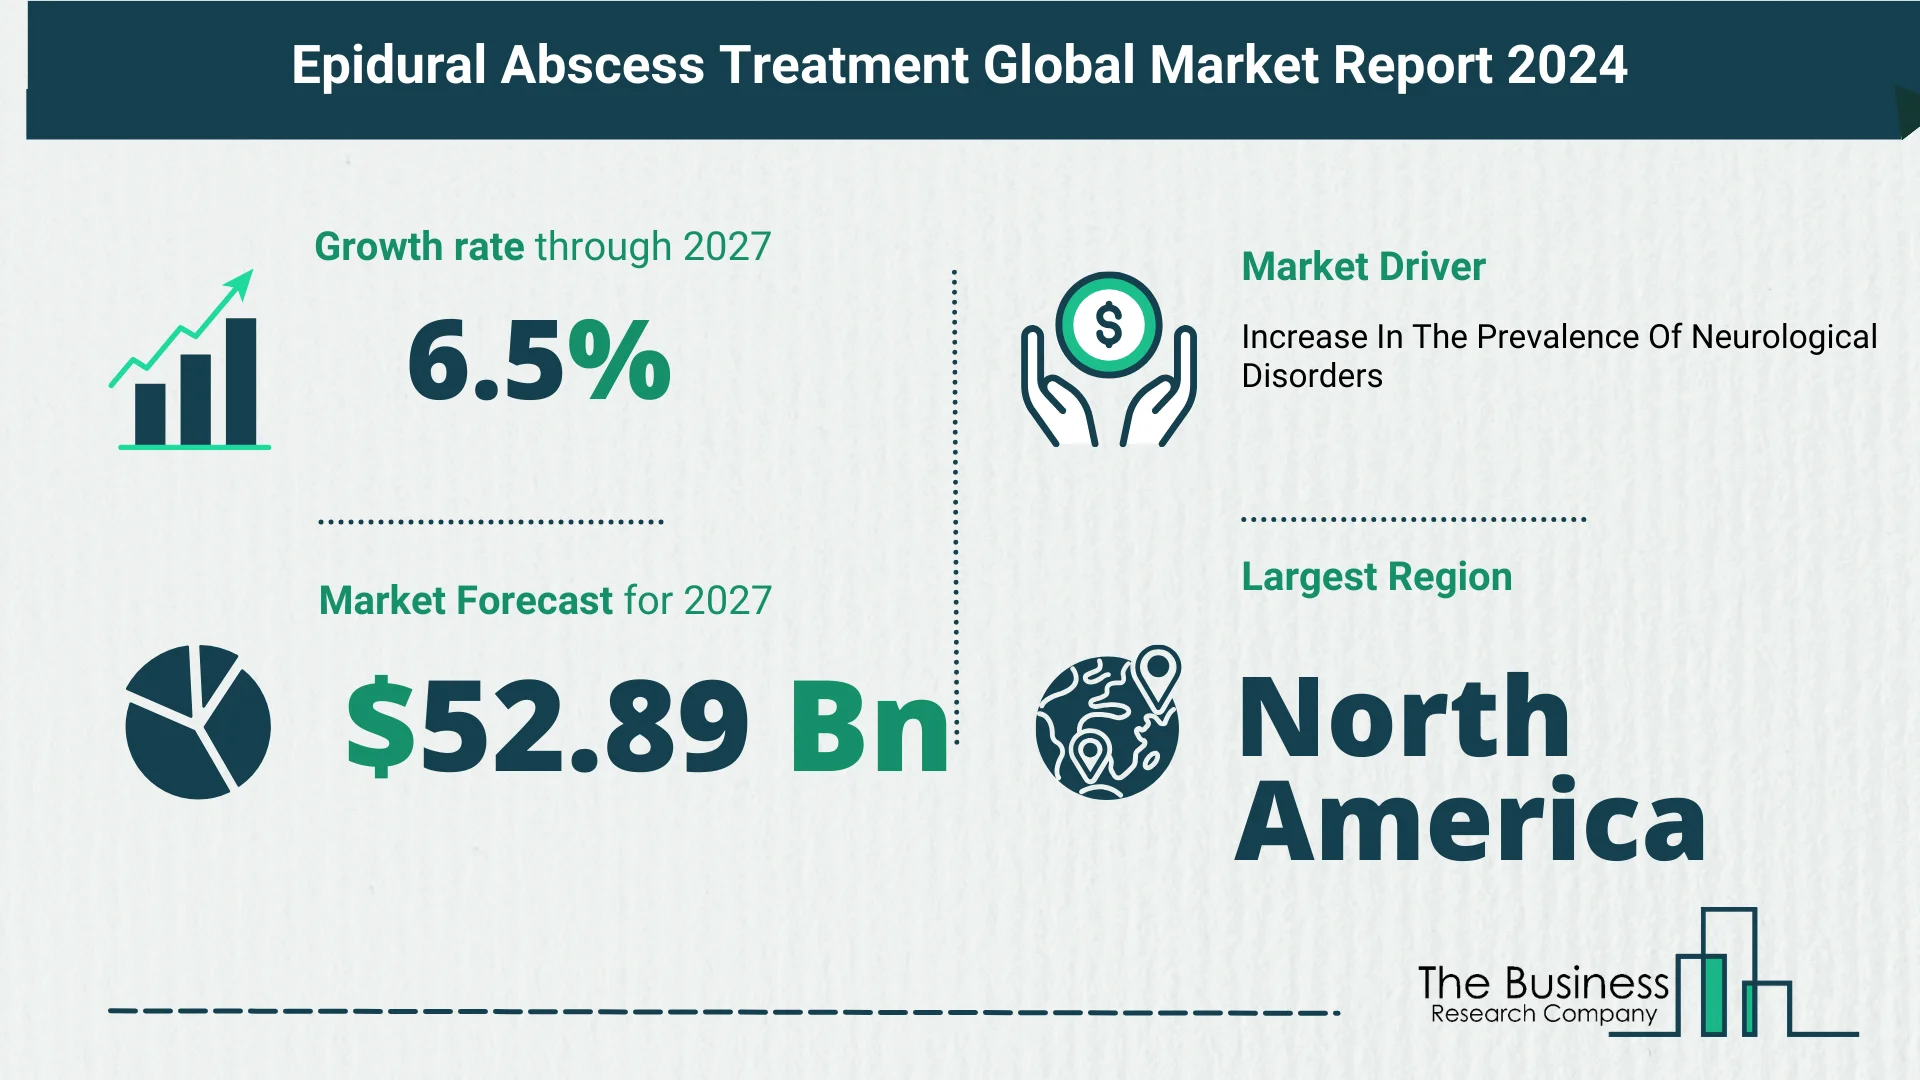 Epidural Abscess Treatment Market Forecast 2024: Forecast Market Size, Drivers And Key Segments